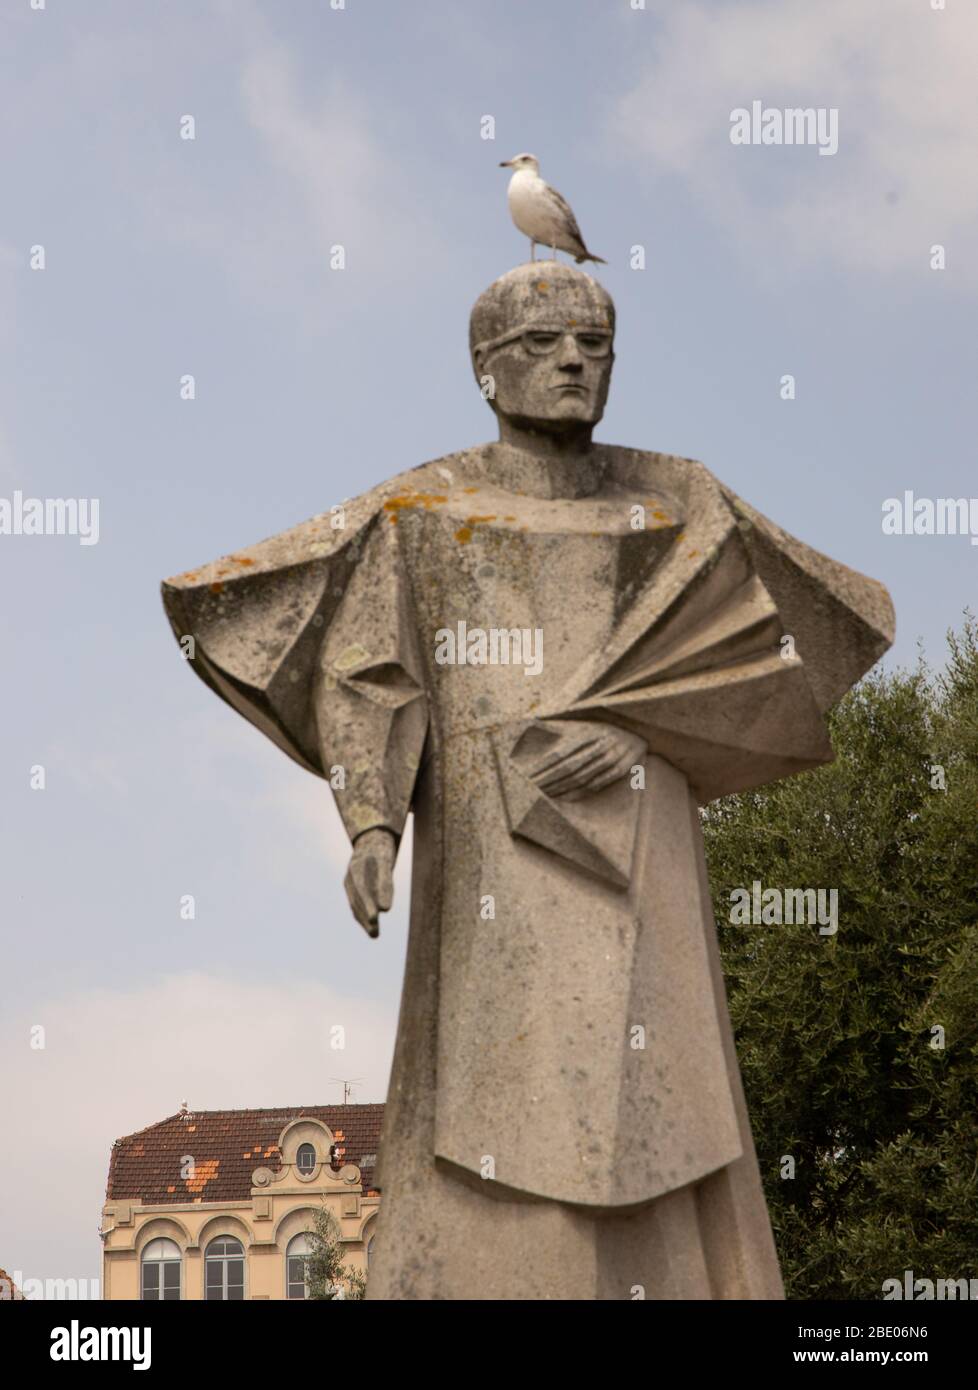 Statue of Antonio Ferreira Gomes, Bishop of Porto (1952-1981) Portuguese Roman Catholic bishop with bird sitting on his head Stock Photo